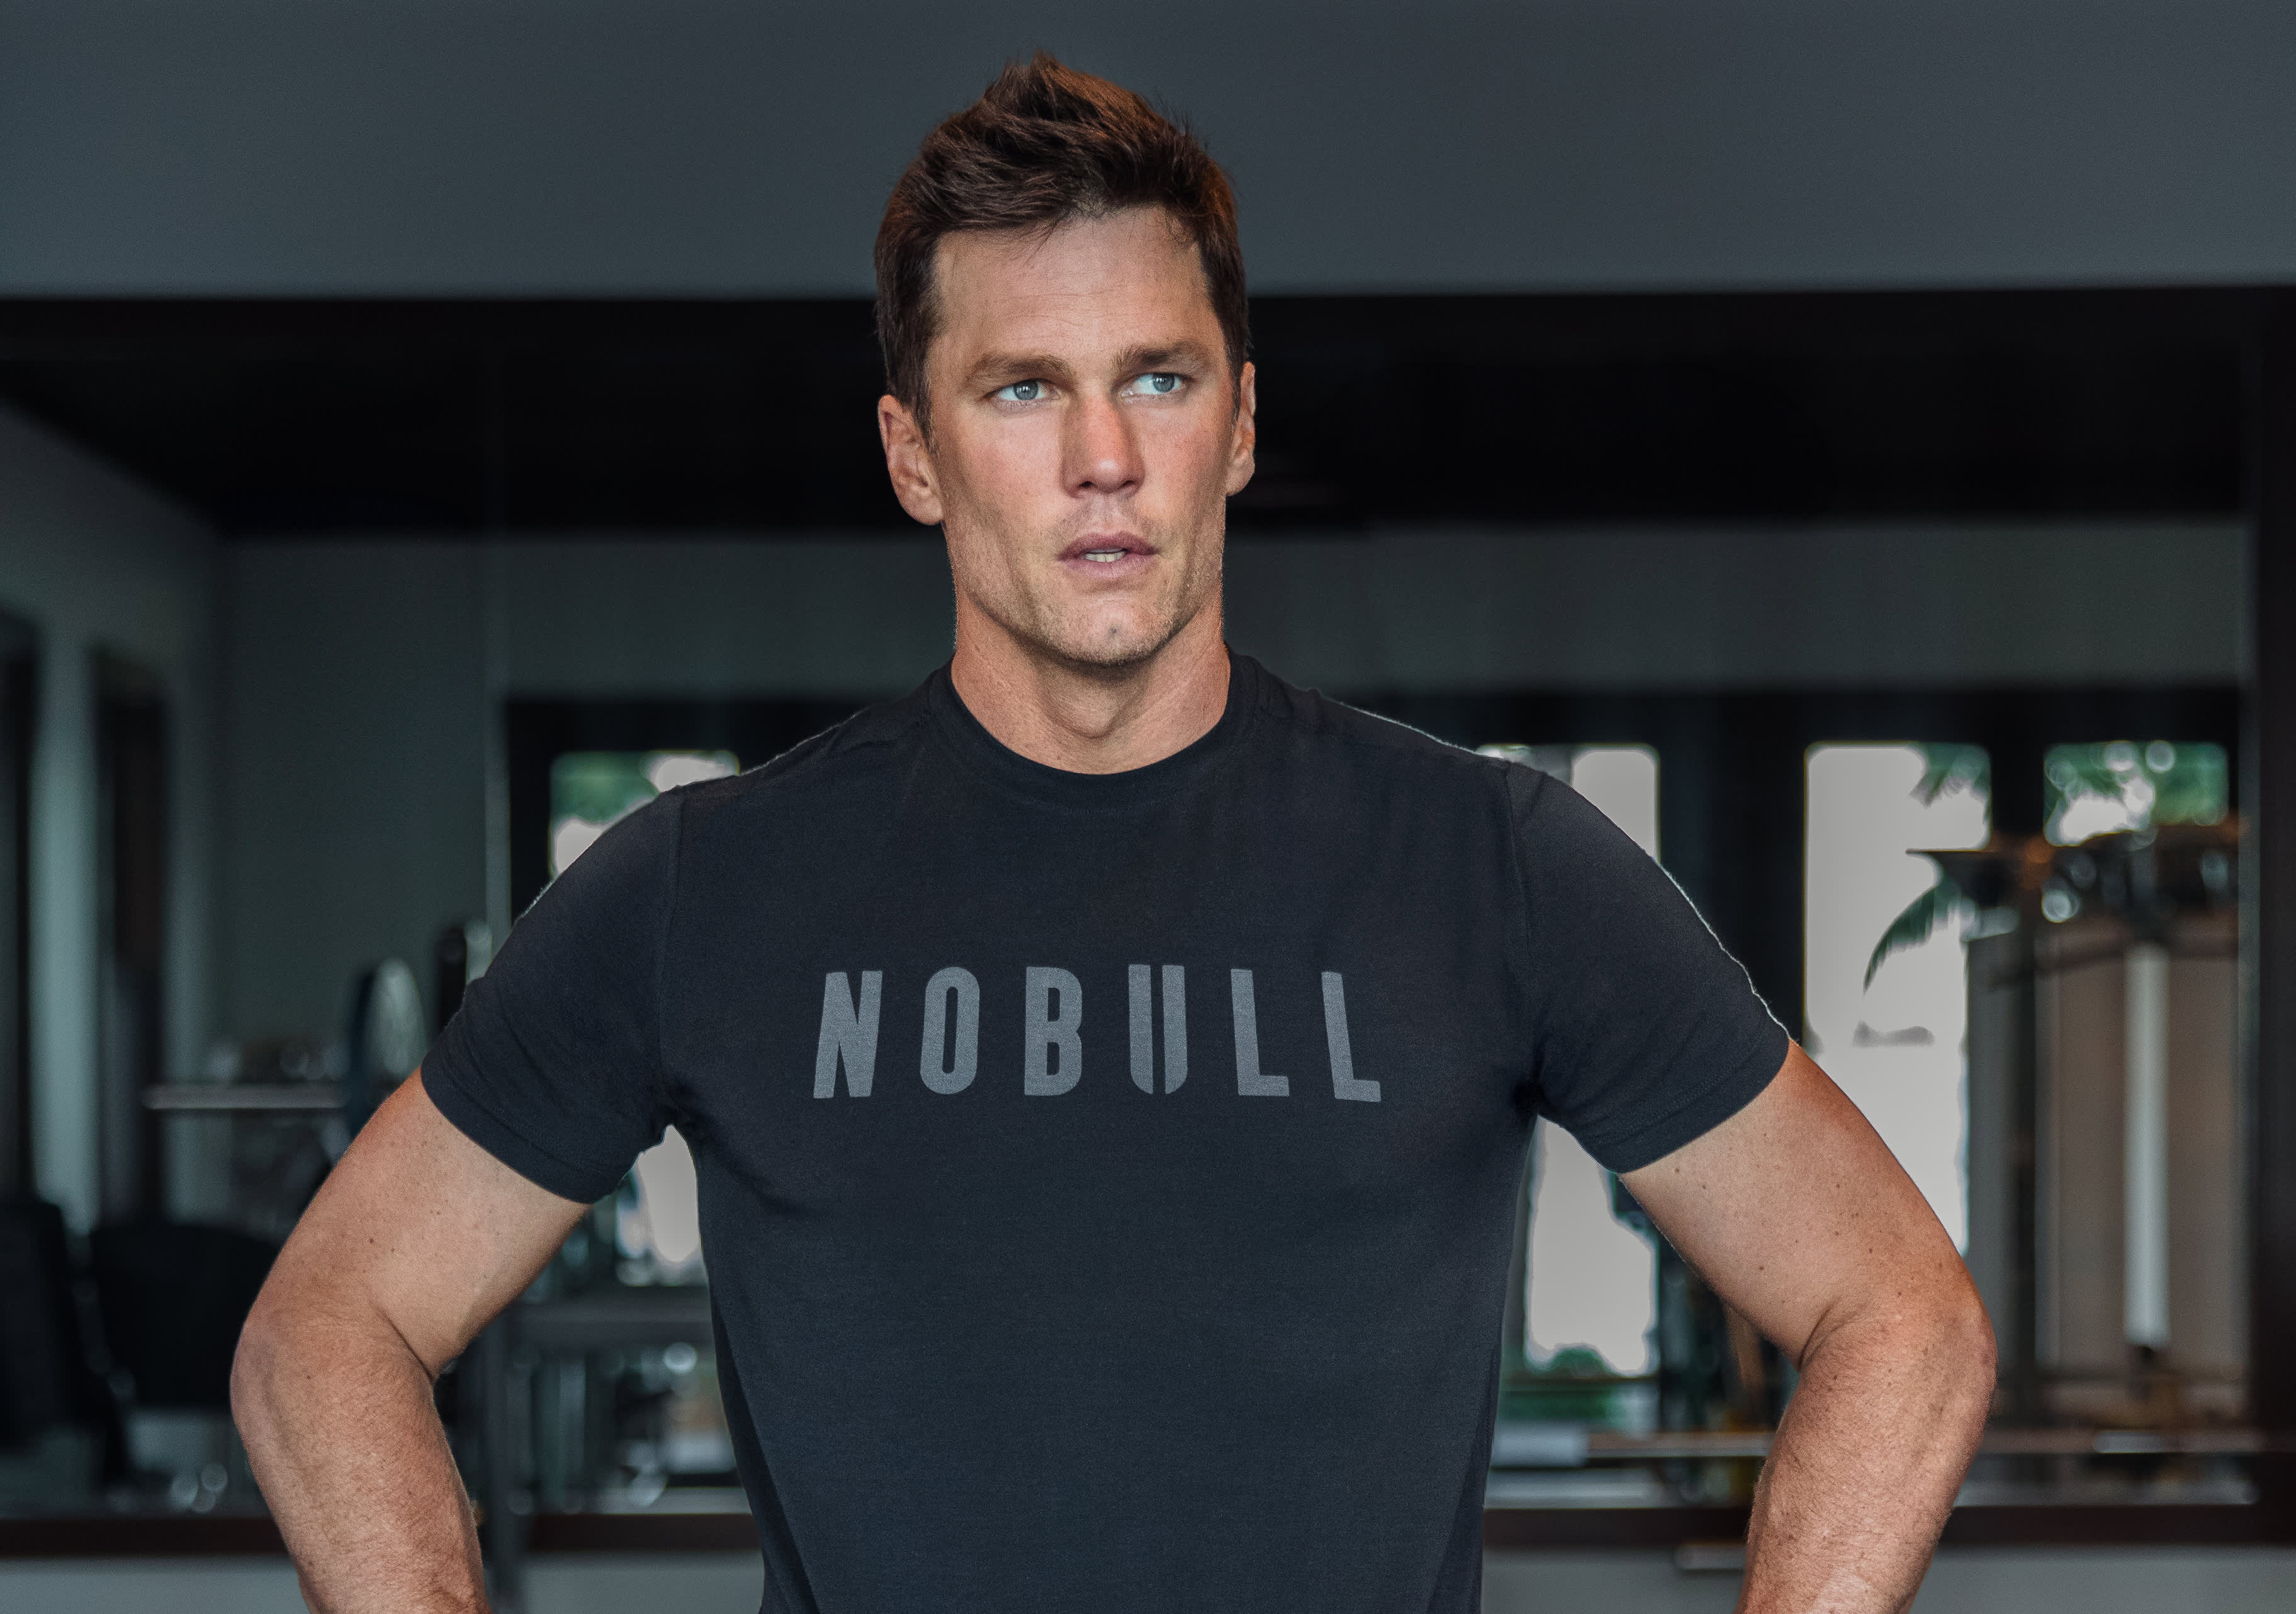 Tom Brady nutrition, apparel brands merging with Nobull